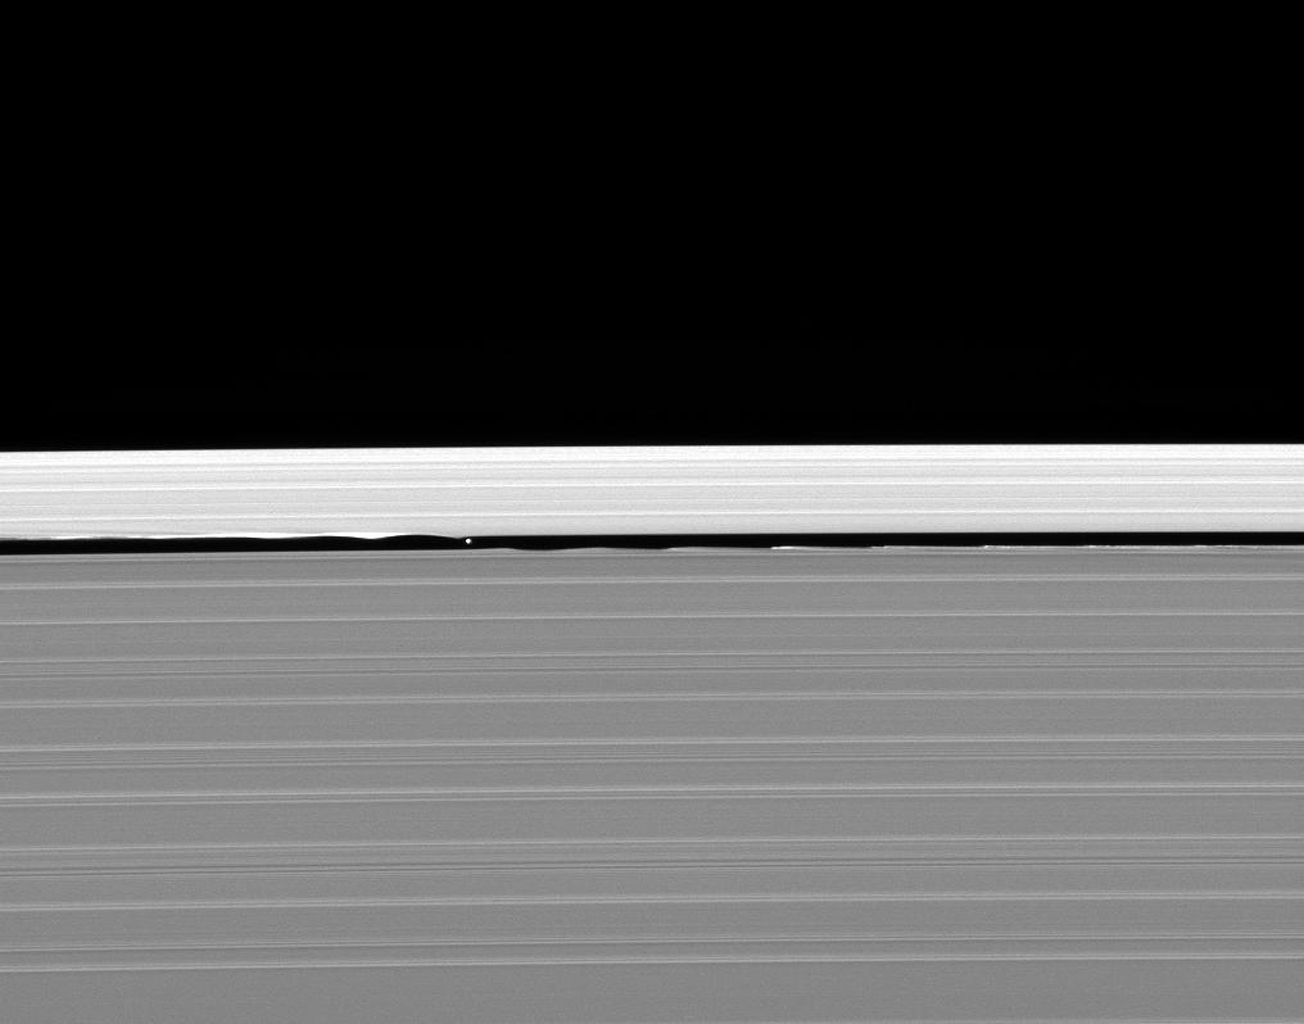 Daphnis, Saturn's wavemaker moon